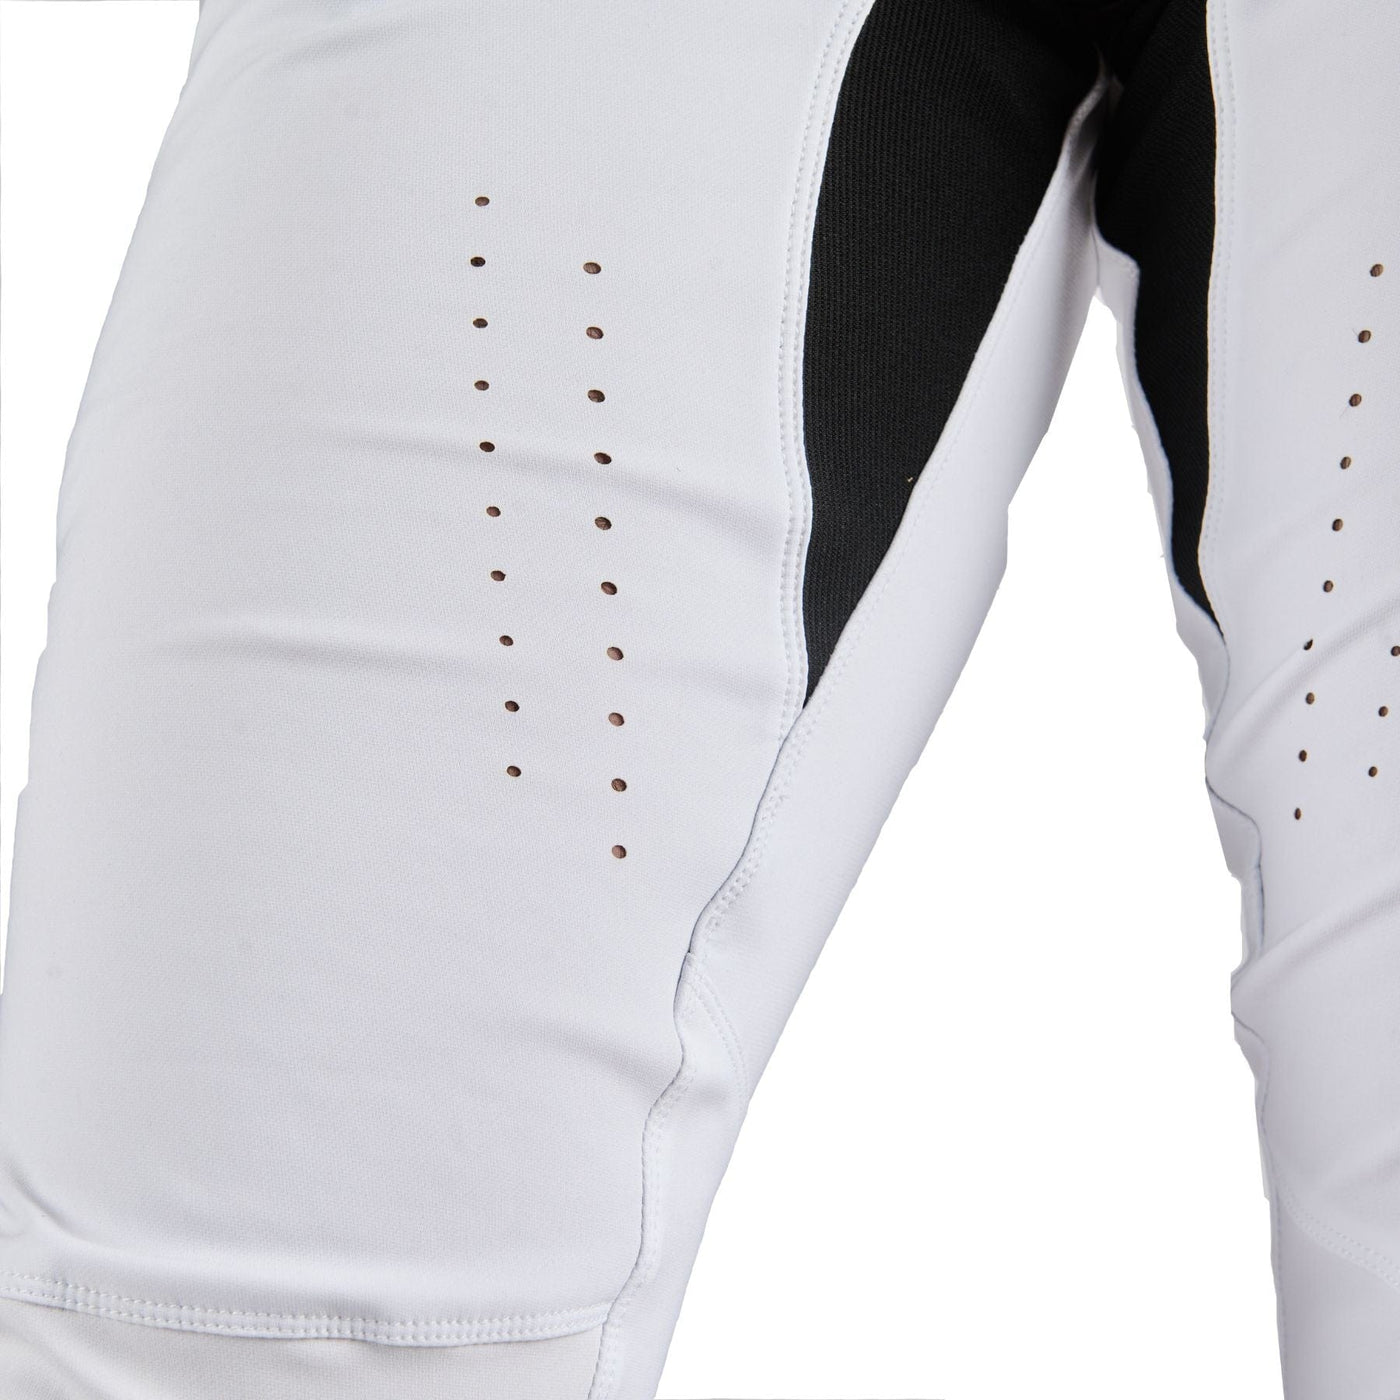 NoLogo Racer BMX Pants - White